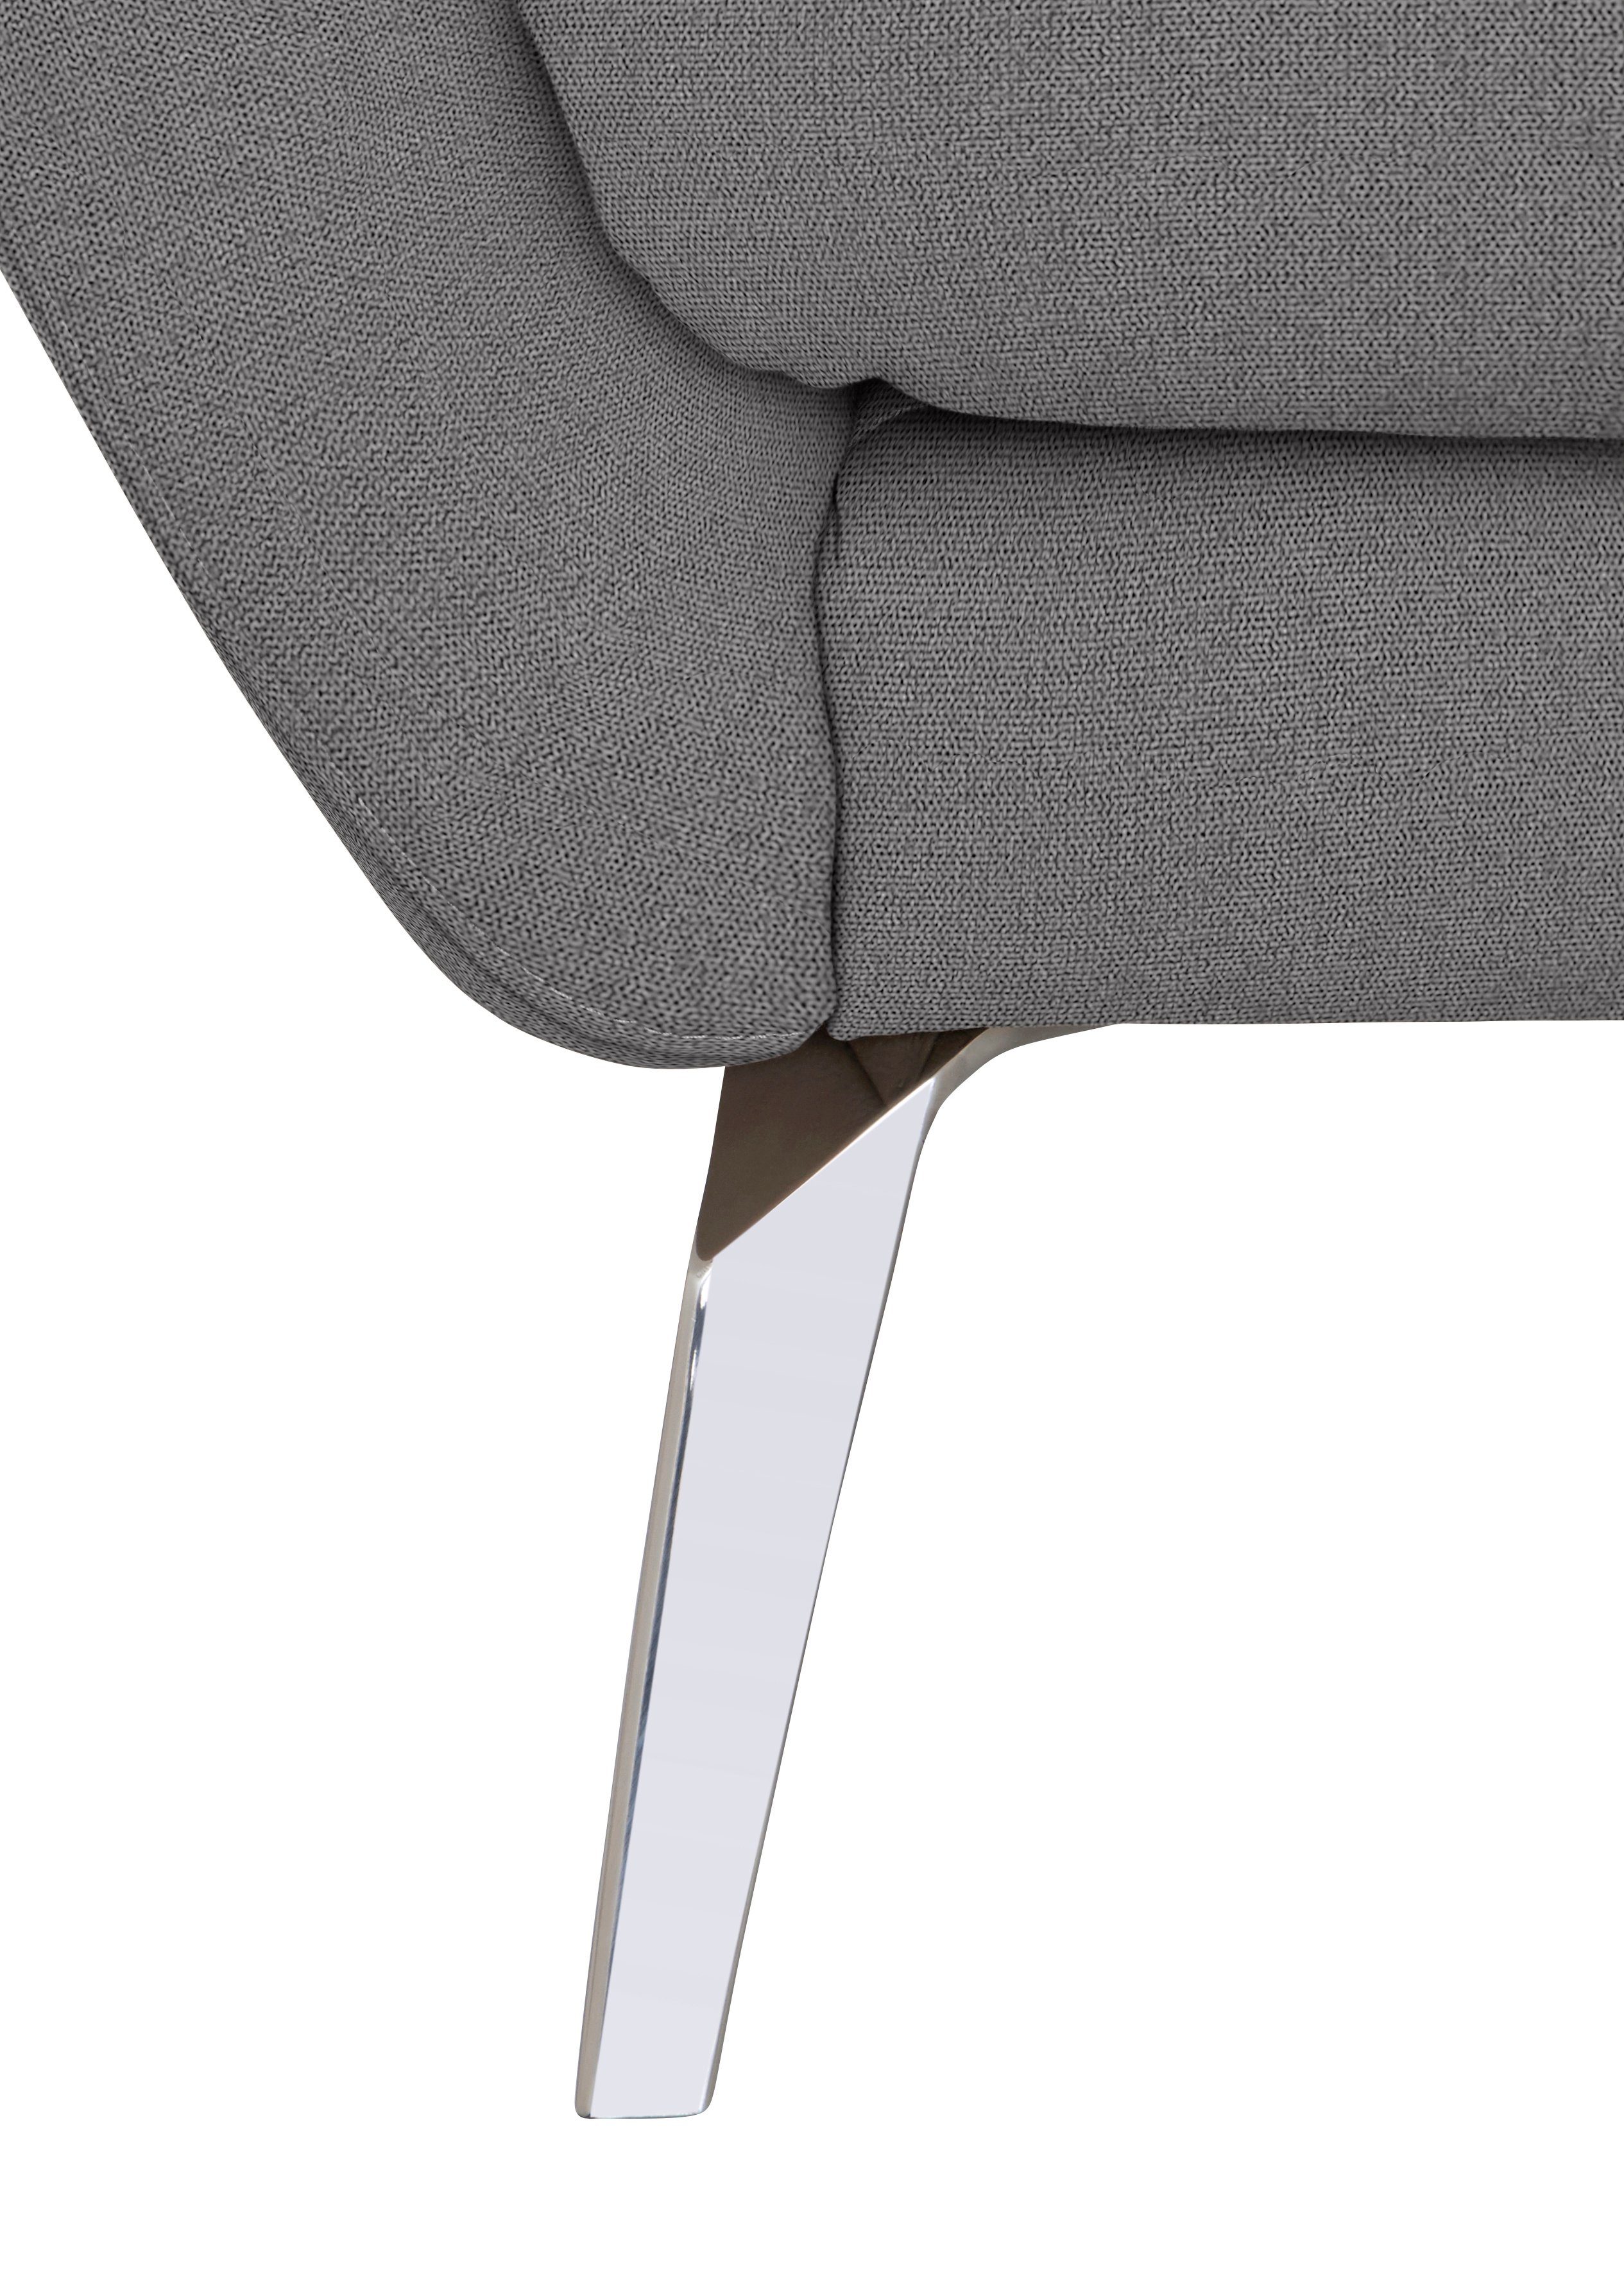 Chrom Heftung Sitz, softy, W.SCHILLIG glänzend Big-Sofa dekorativer mit im Füße